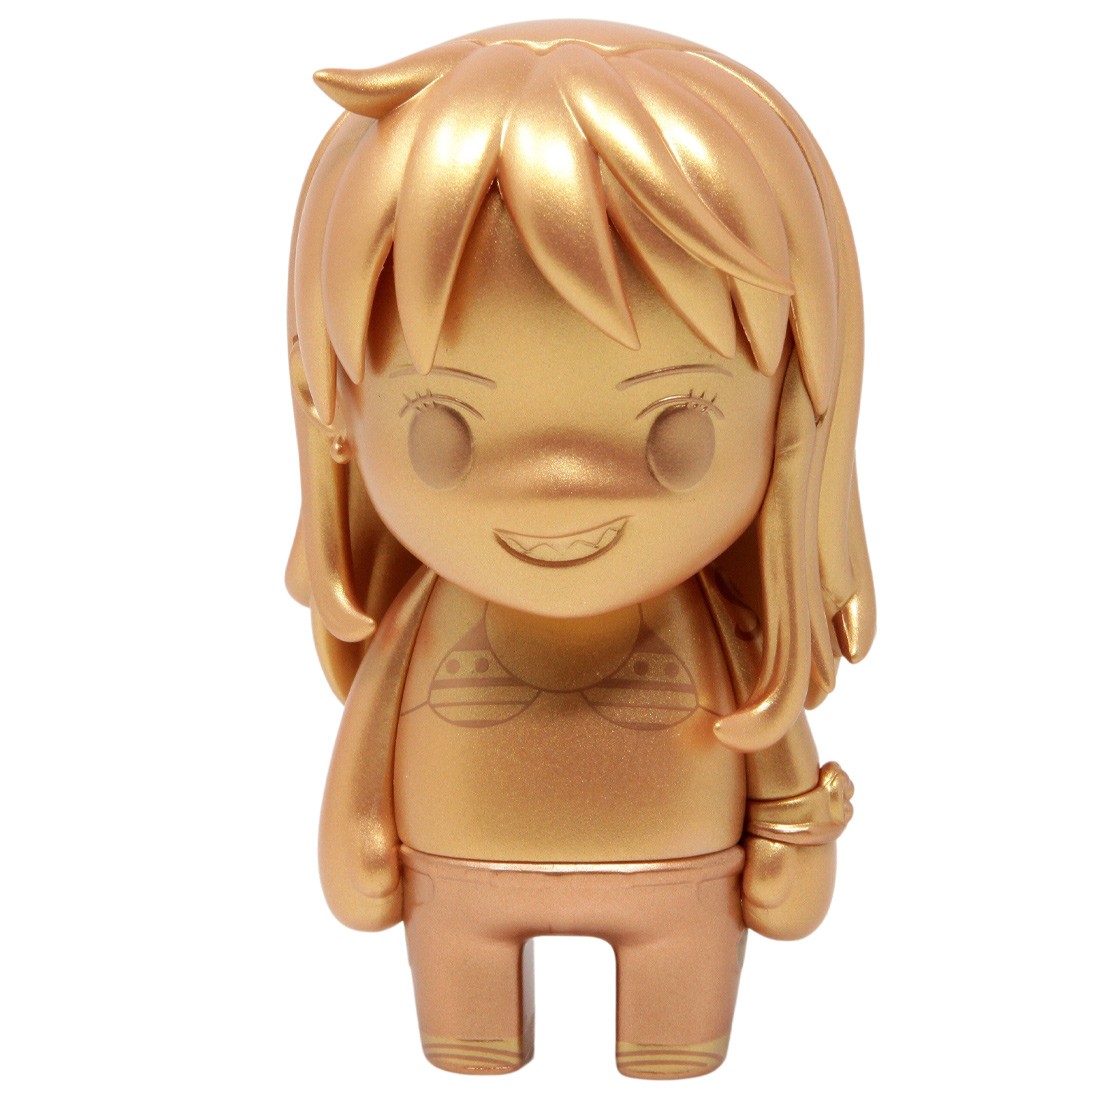 Kokies x One Piece Nami Gold Figure (gold)